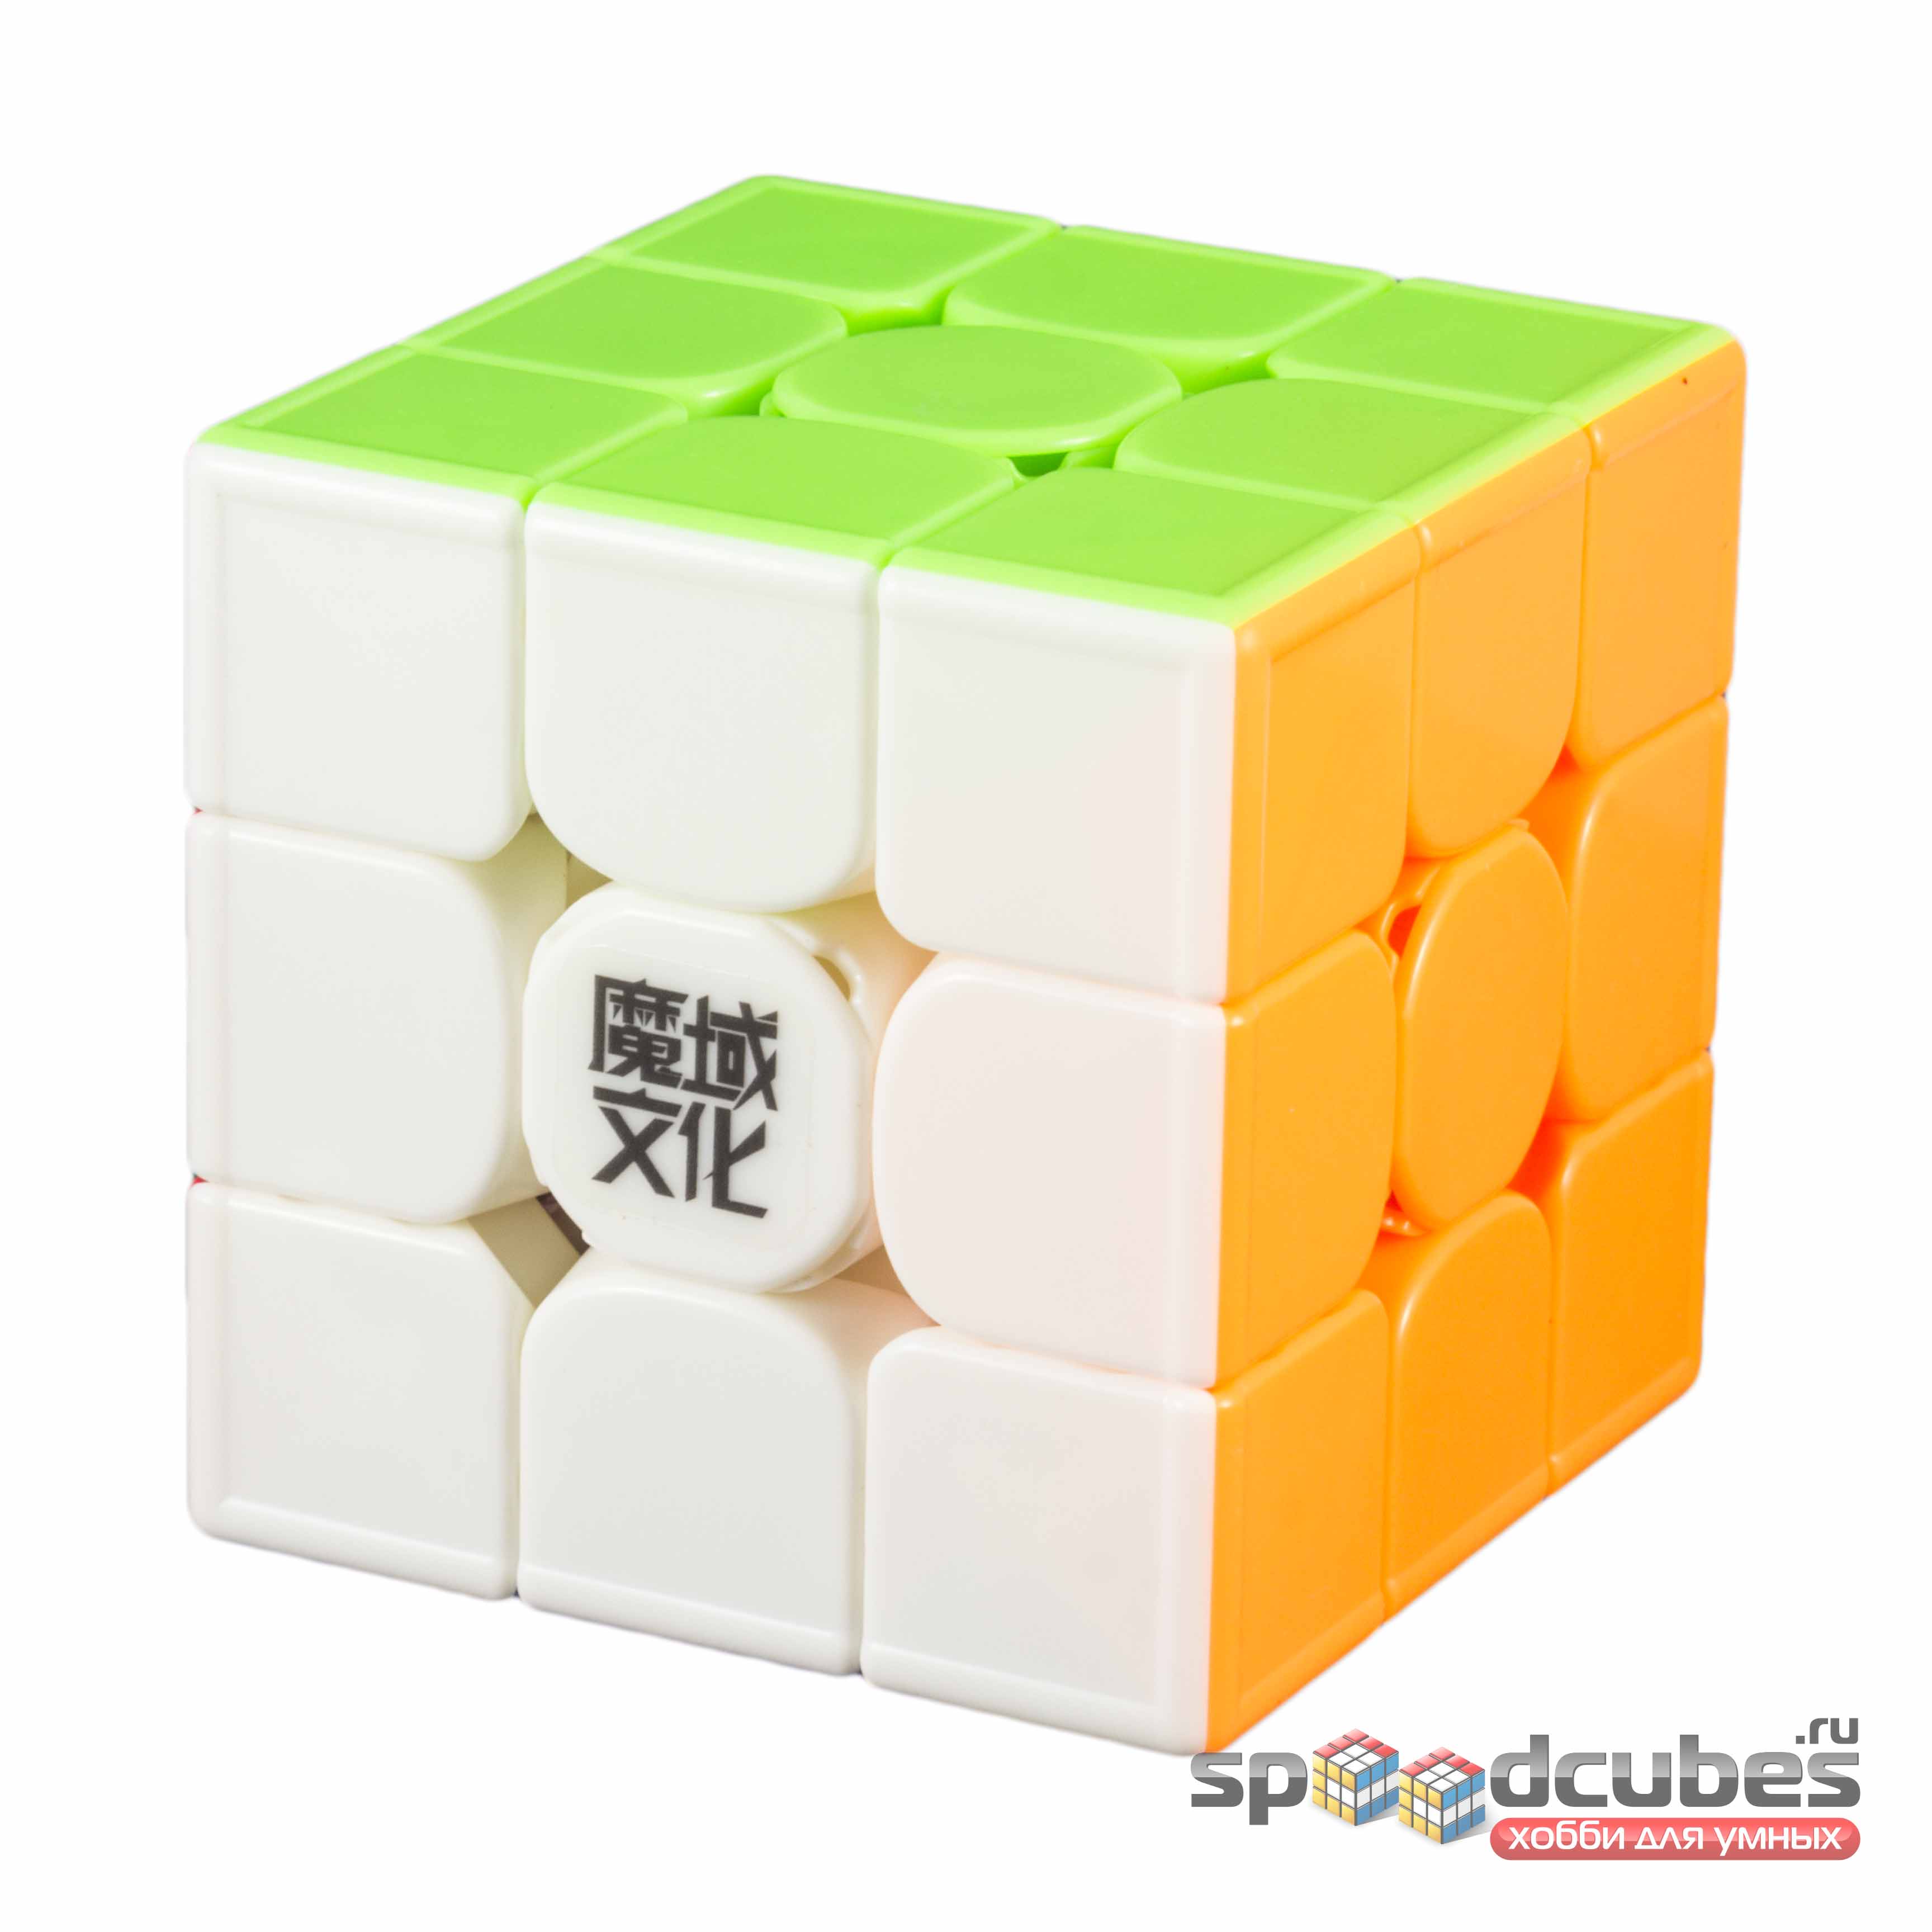 Купить куб барнаул. MOYU Weilong gts3. MOYU Weilong GTS 3m. MOYU 3x3x3 Weilong GTS 3m Limited. Кубик Рубика MOYU 3x3x3.